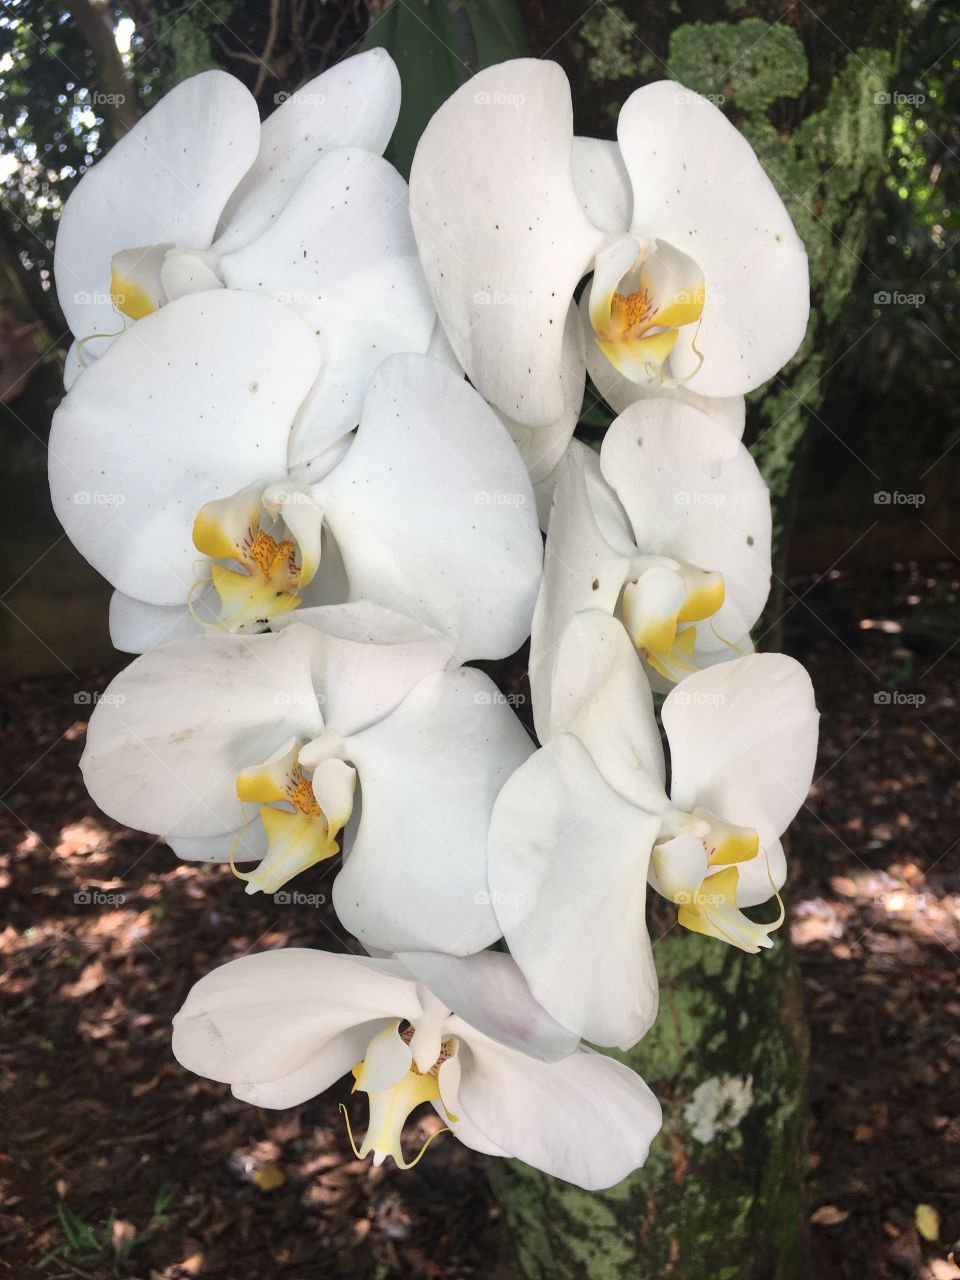 Orquídeas da Vovó Lalá! Que beleza... a natureza nos proporciona essas plantas maravilhosas.